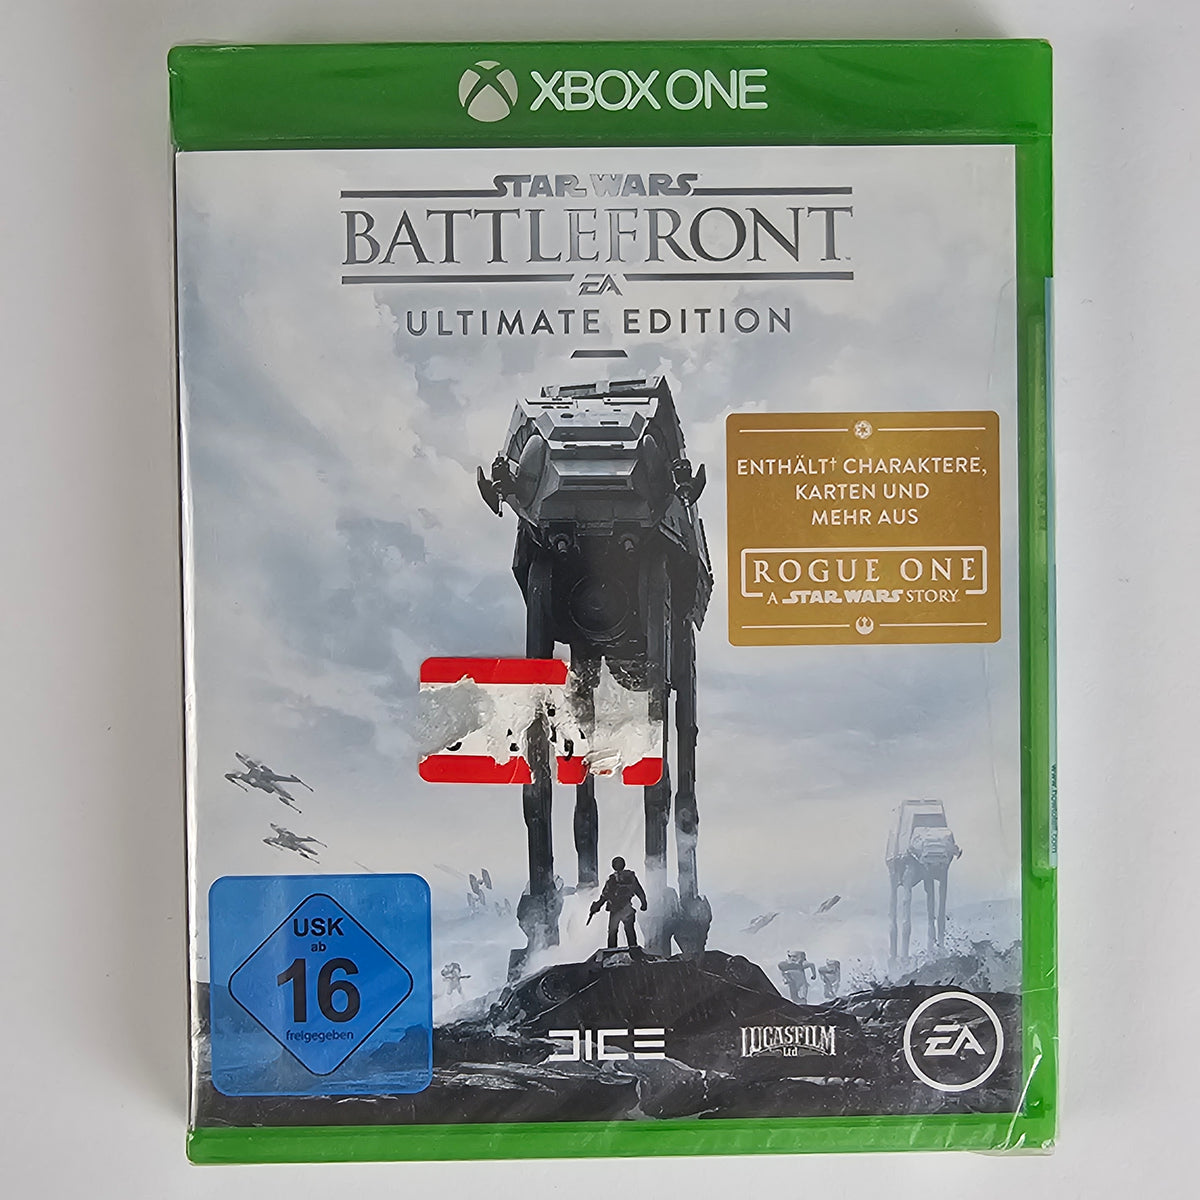 Star Wars Battlefront Ultimate [XBOXO]